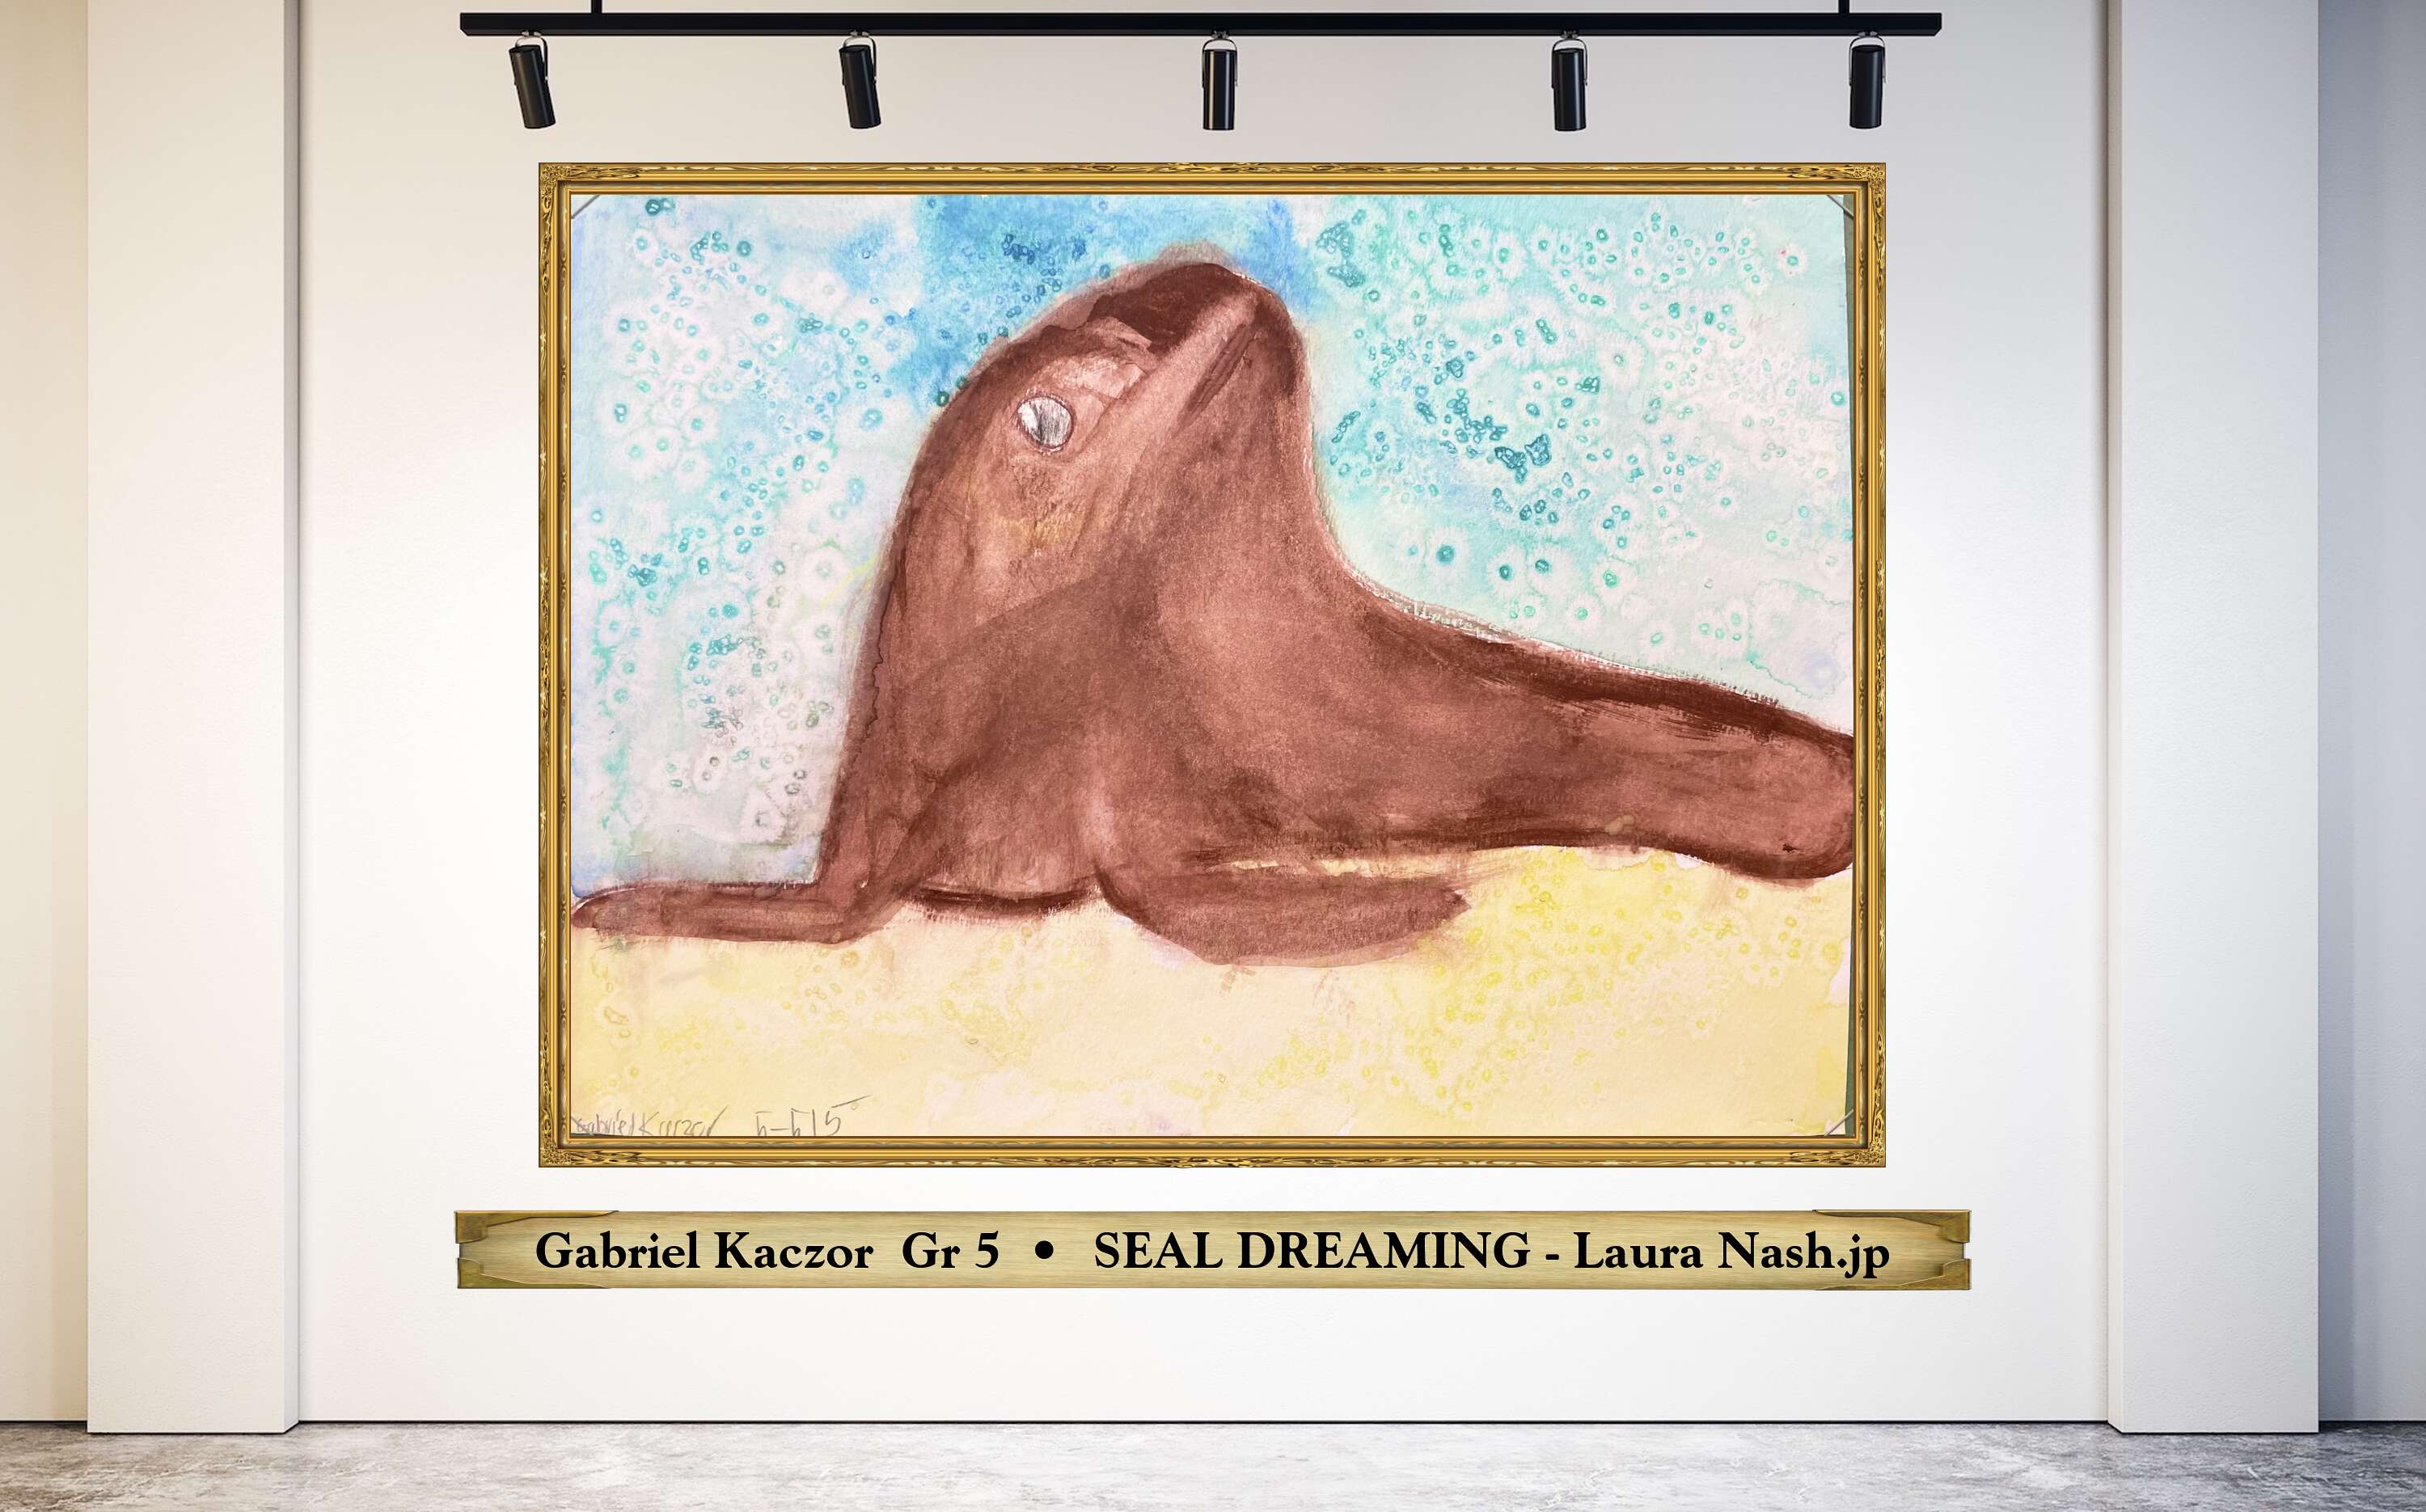 Gabriel Kaczor  Gr 5  •  SEAL DREAMING - Laura Nash.jp